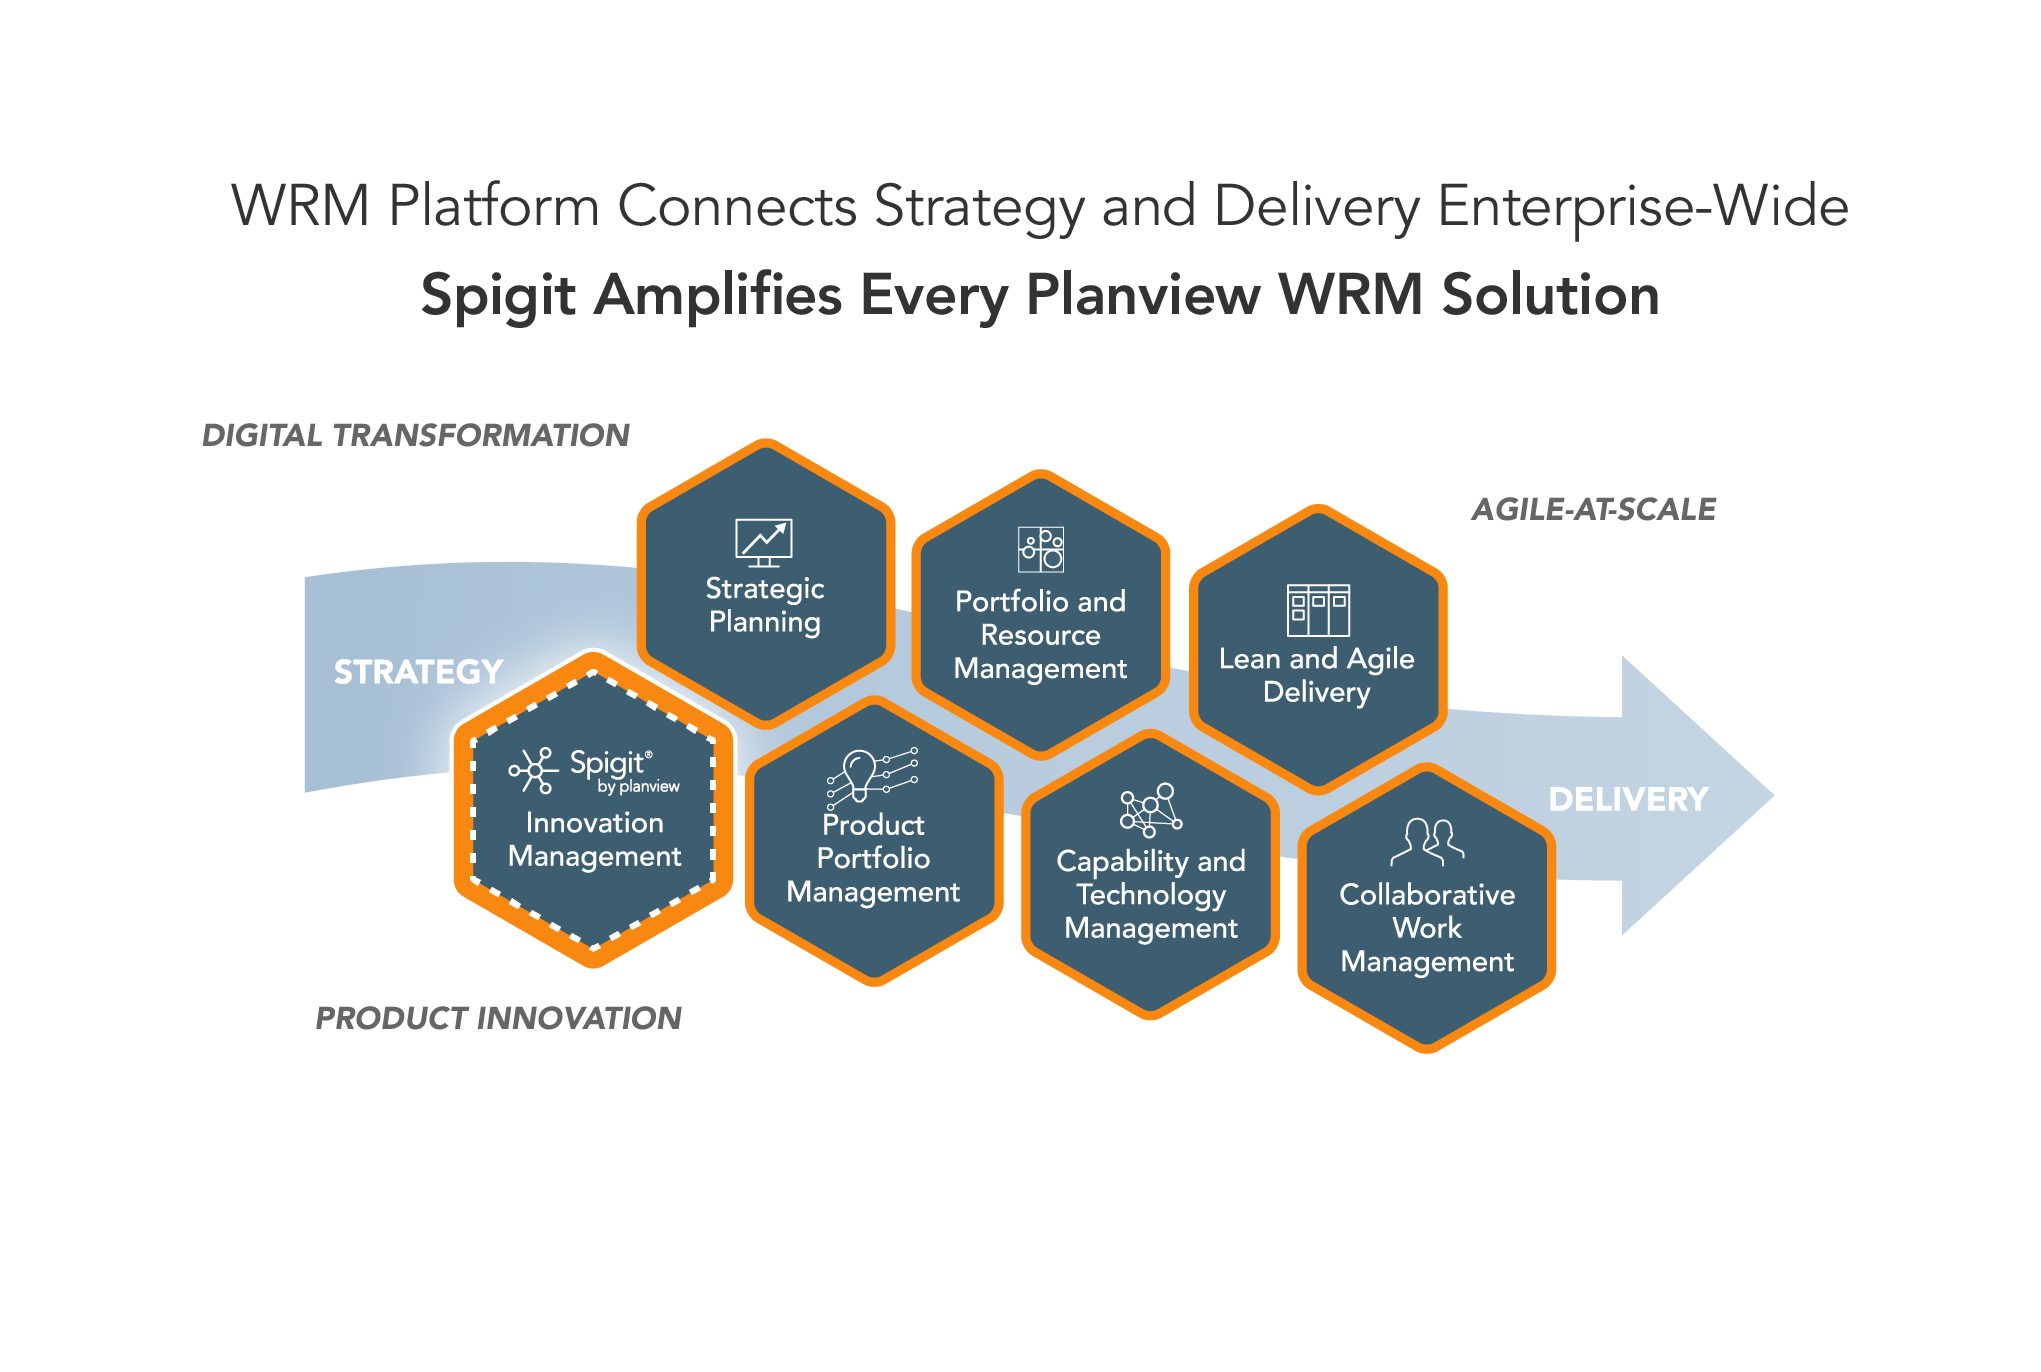 Spigit Amplifies Every Planview WRM Solution